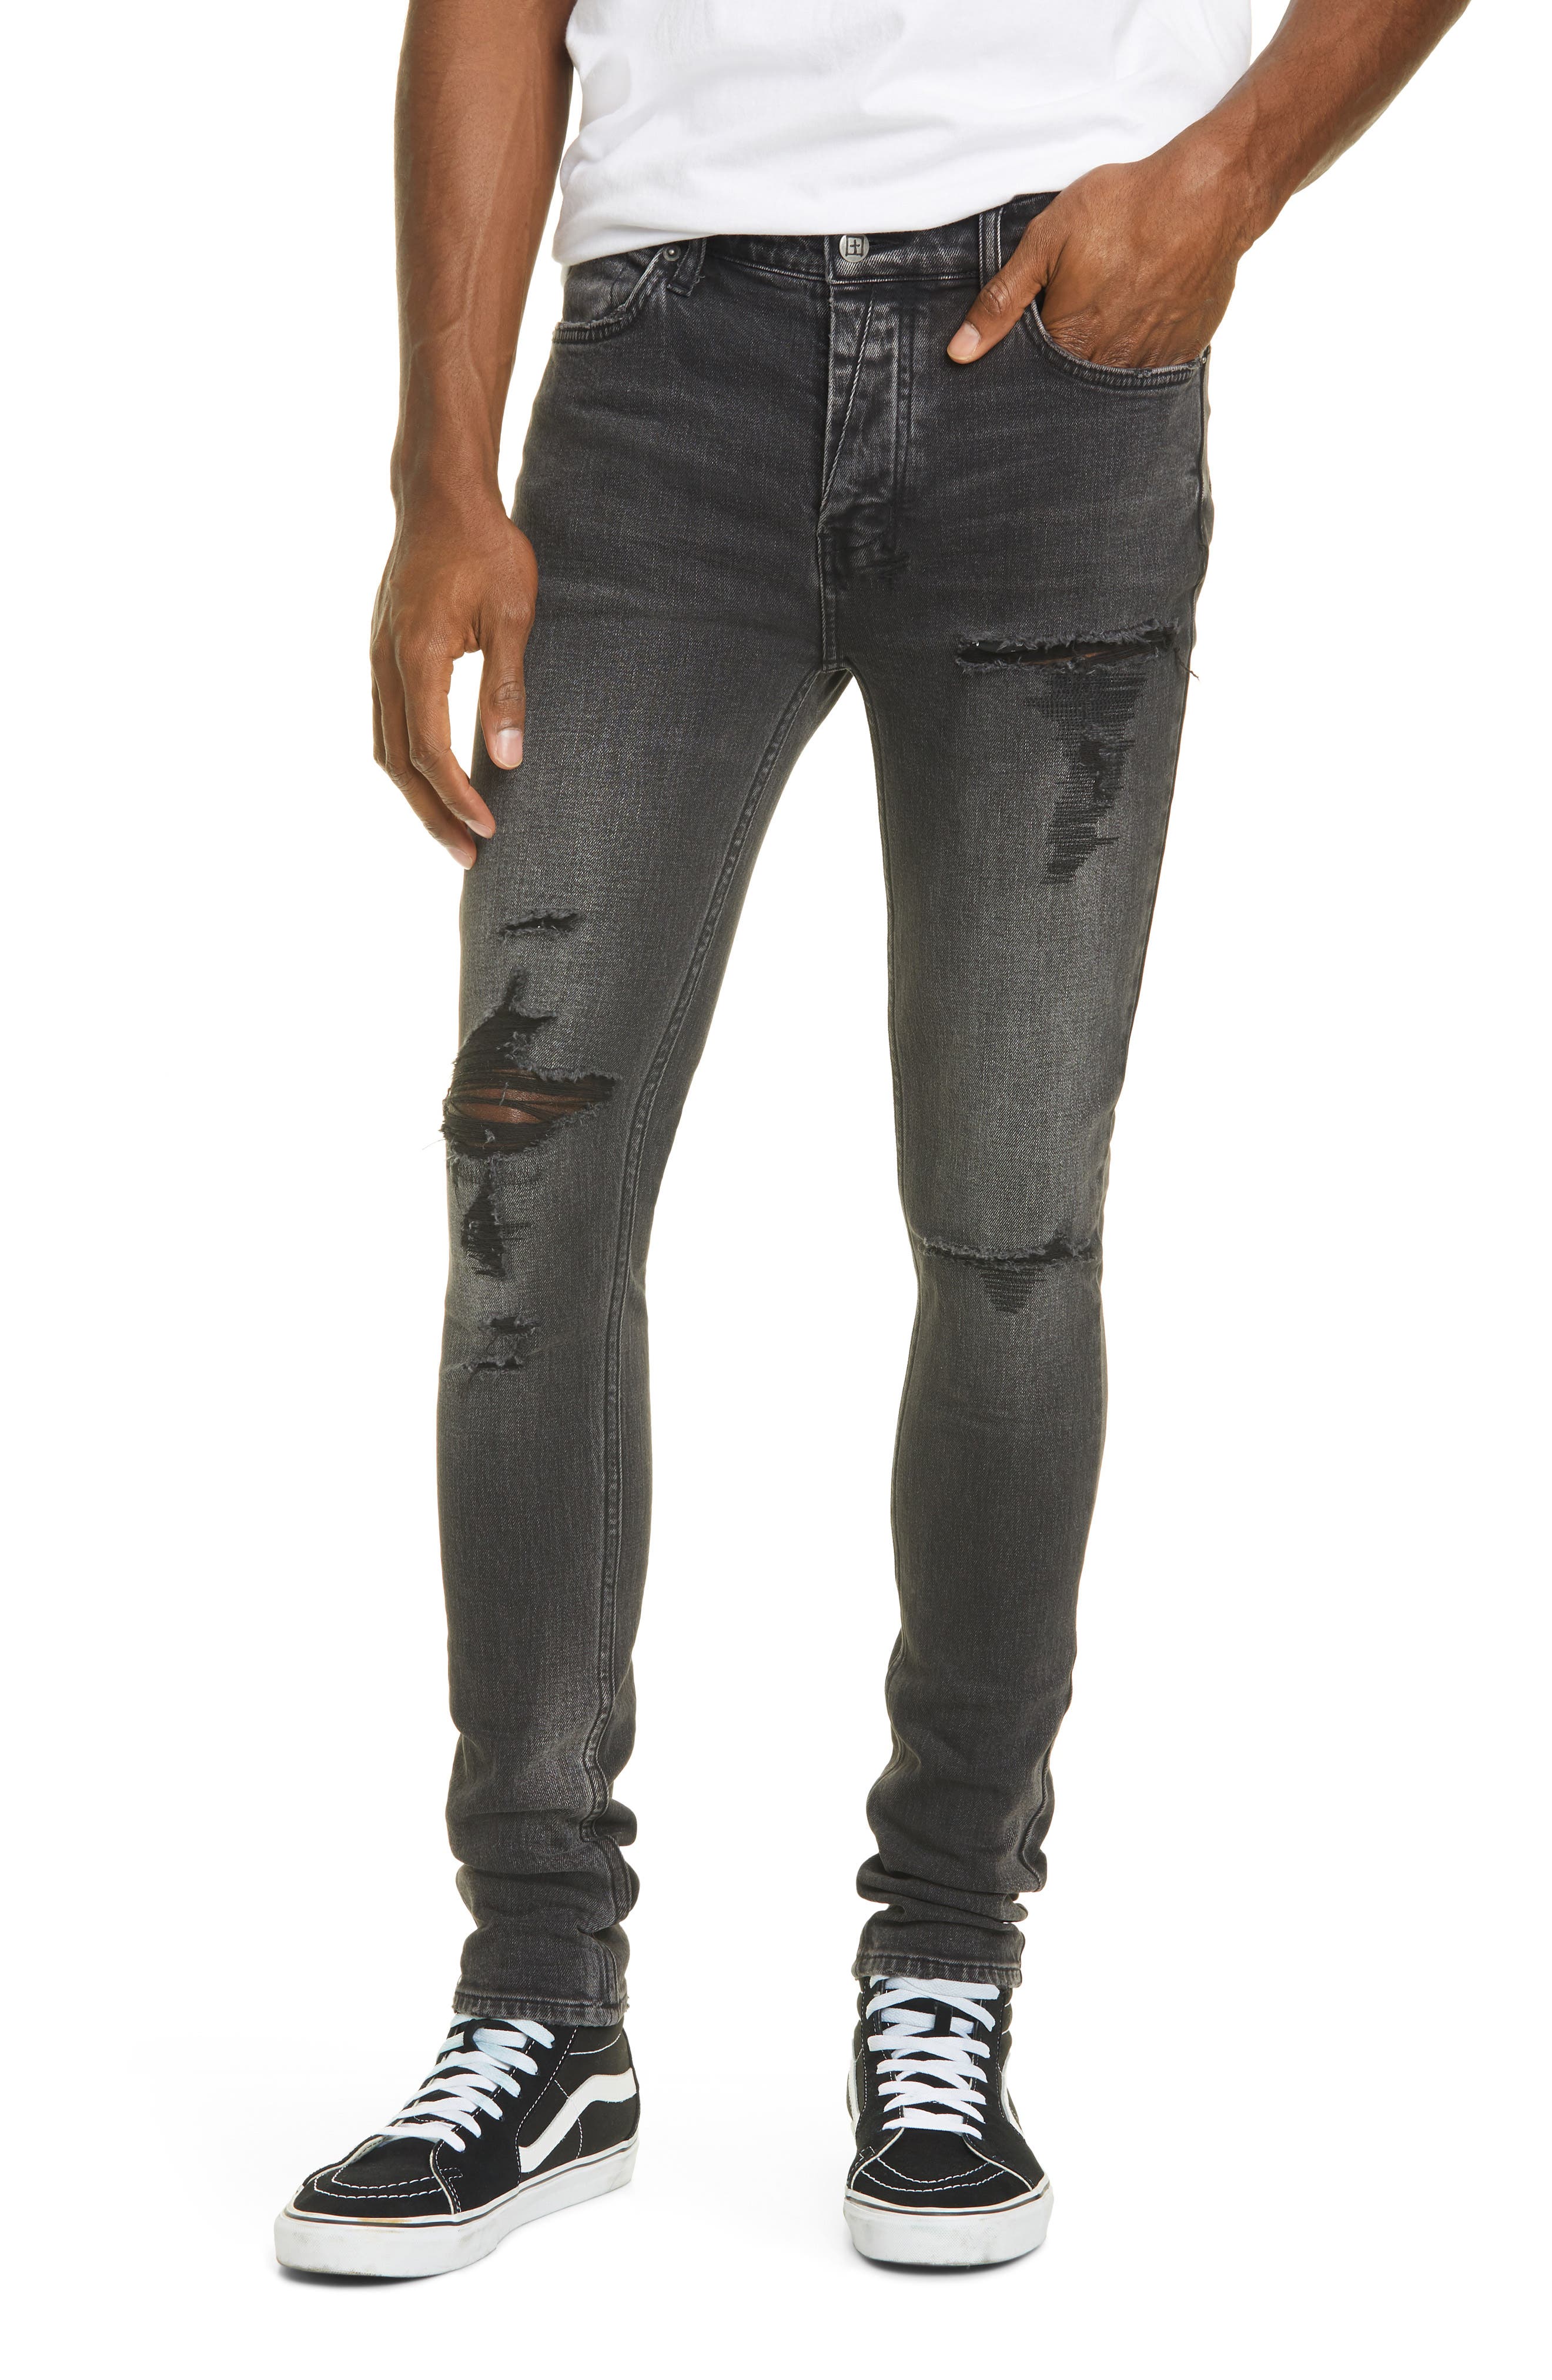 calvin klein jeans starting price